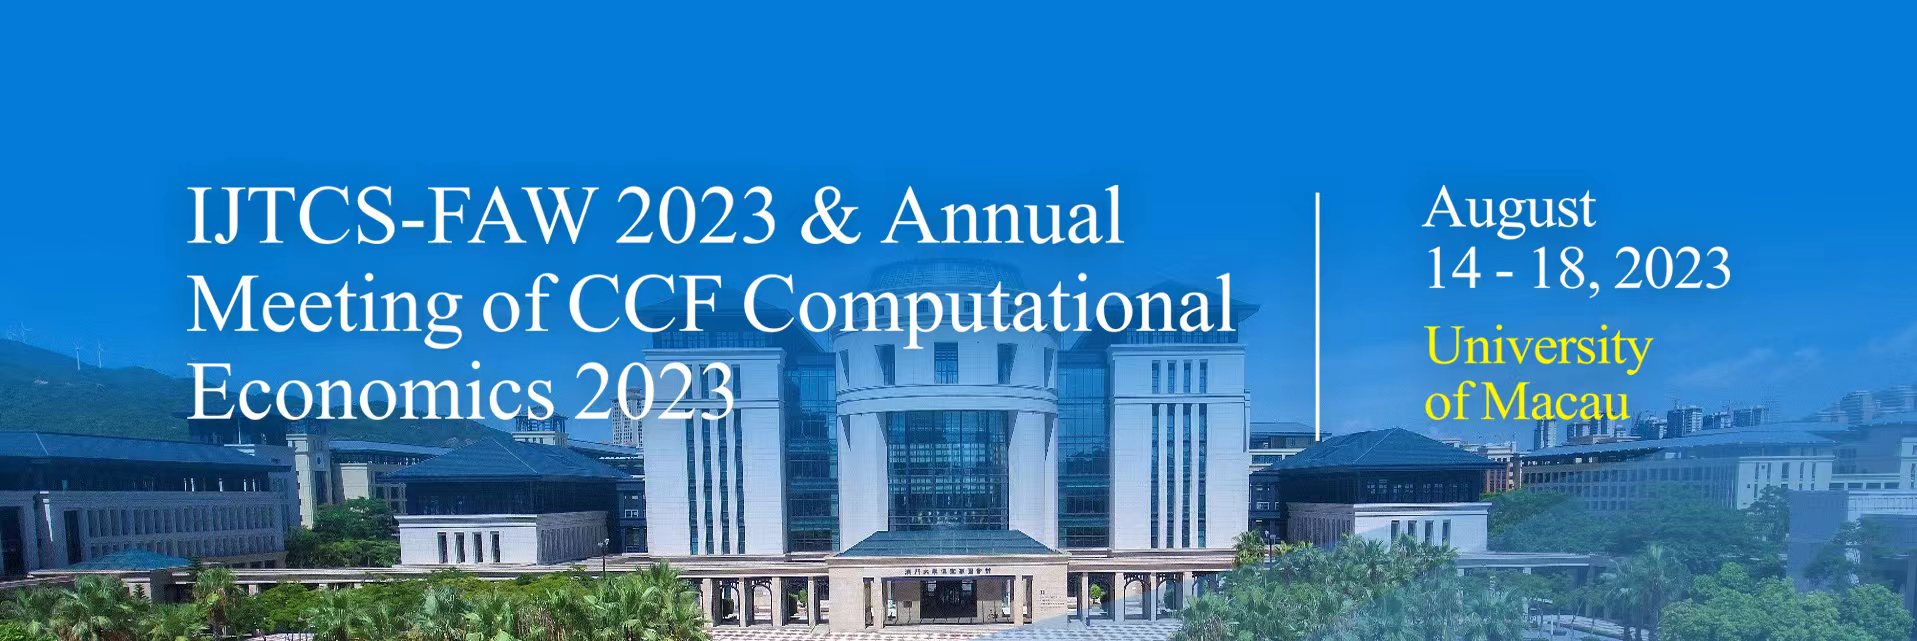 IJTCS-FAW 2023 & Annual Meeting of CCF Computational Economics 2023